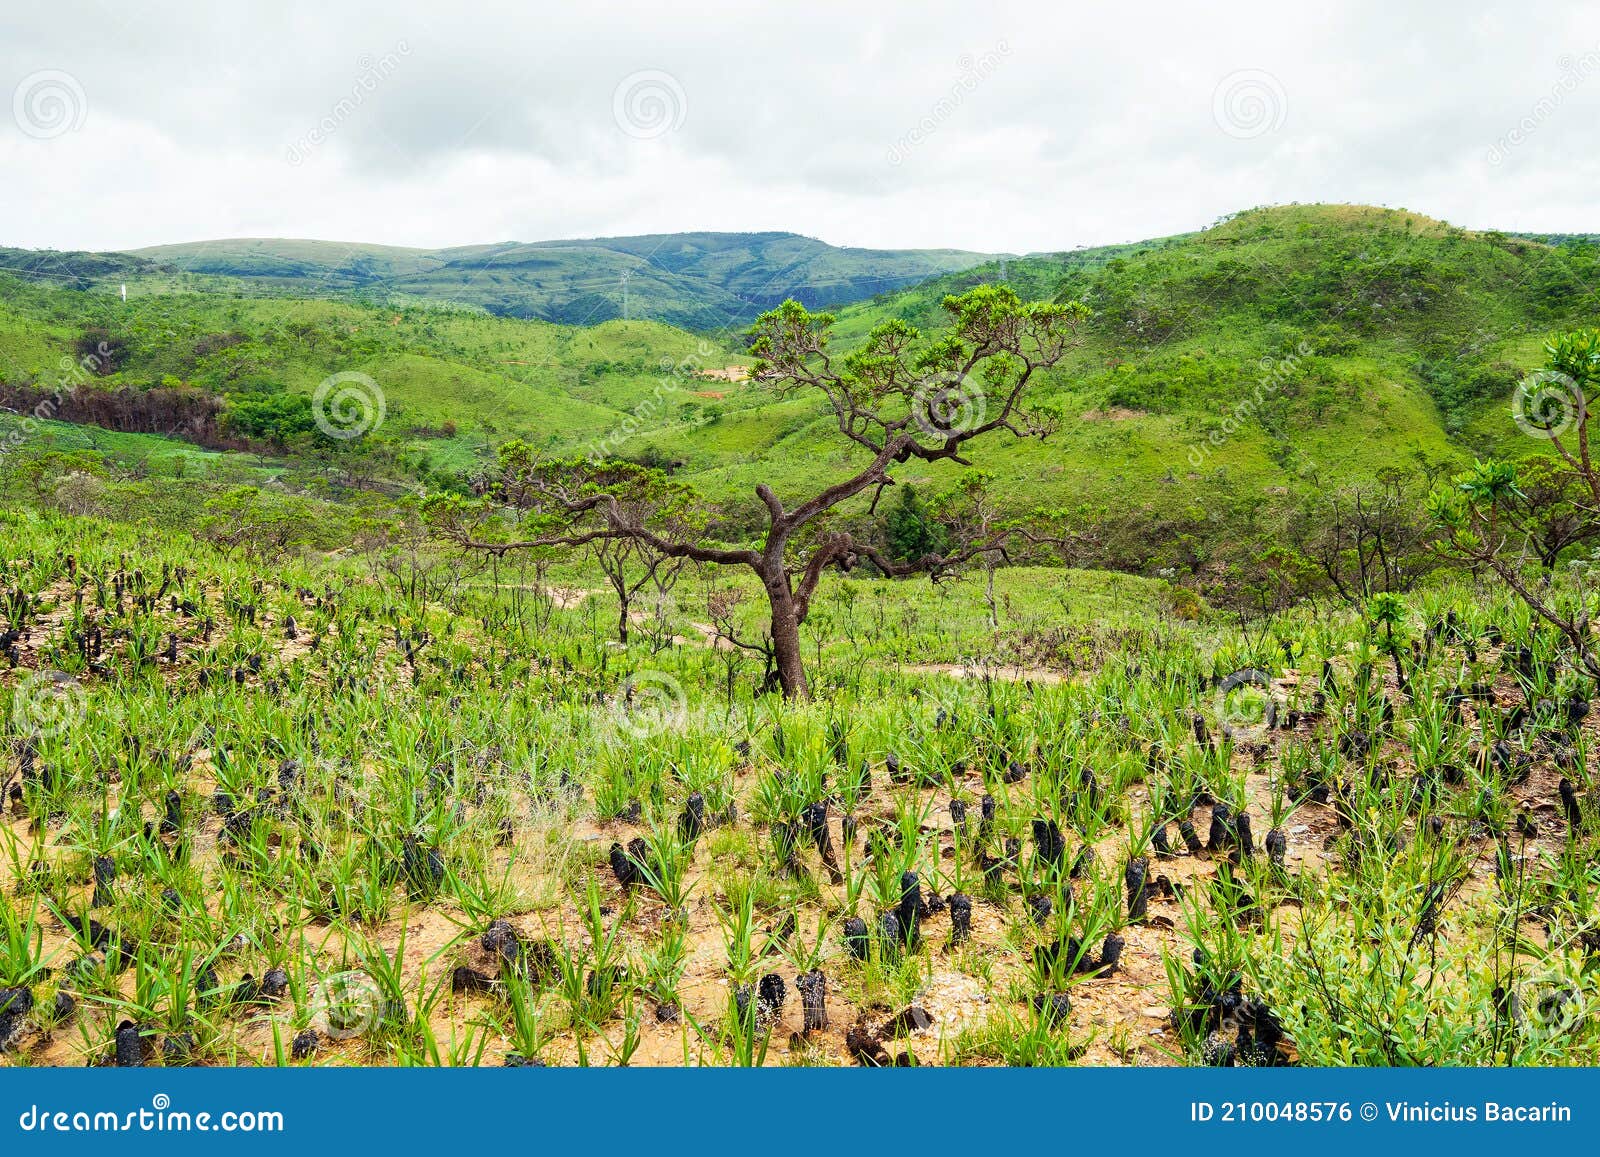 vegetation of the brazilian cerrado on the hills